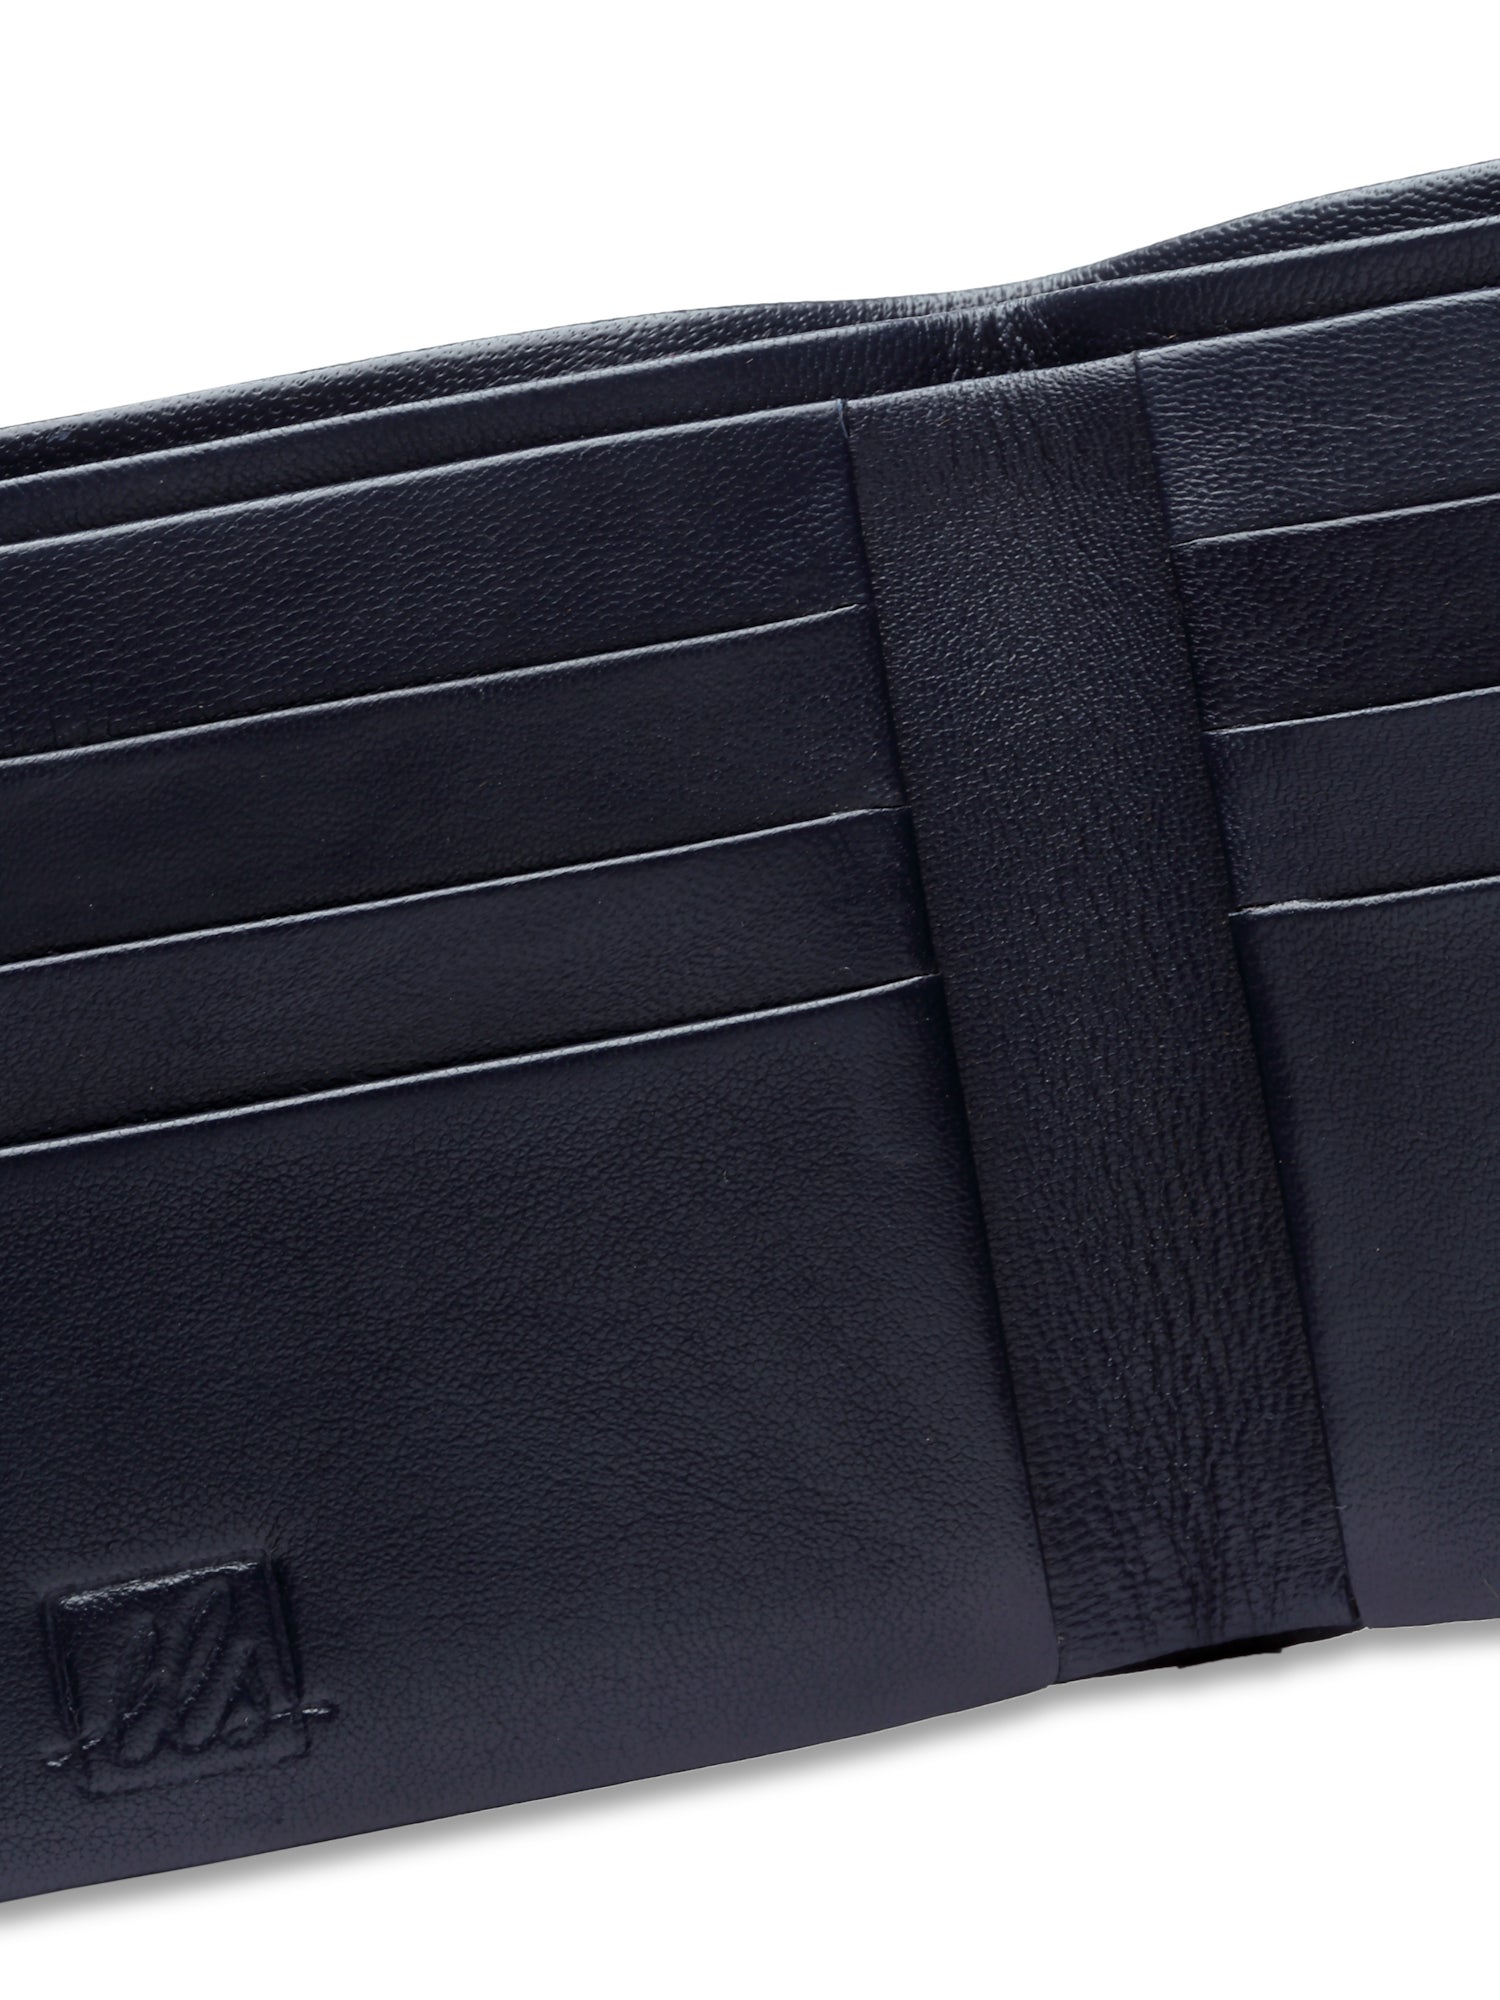 Mens' Soft Bi Fold Wallet - Navy Blue